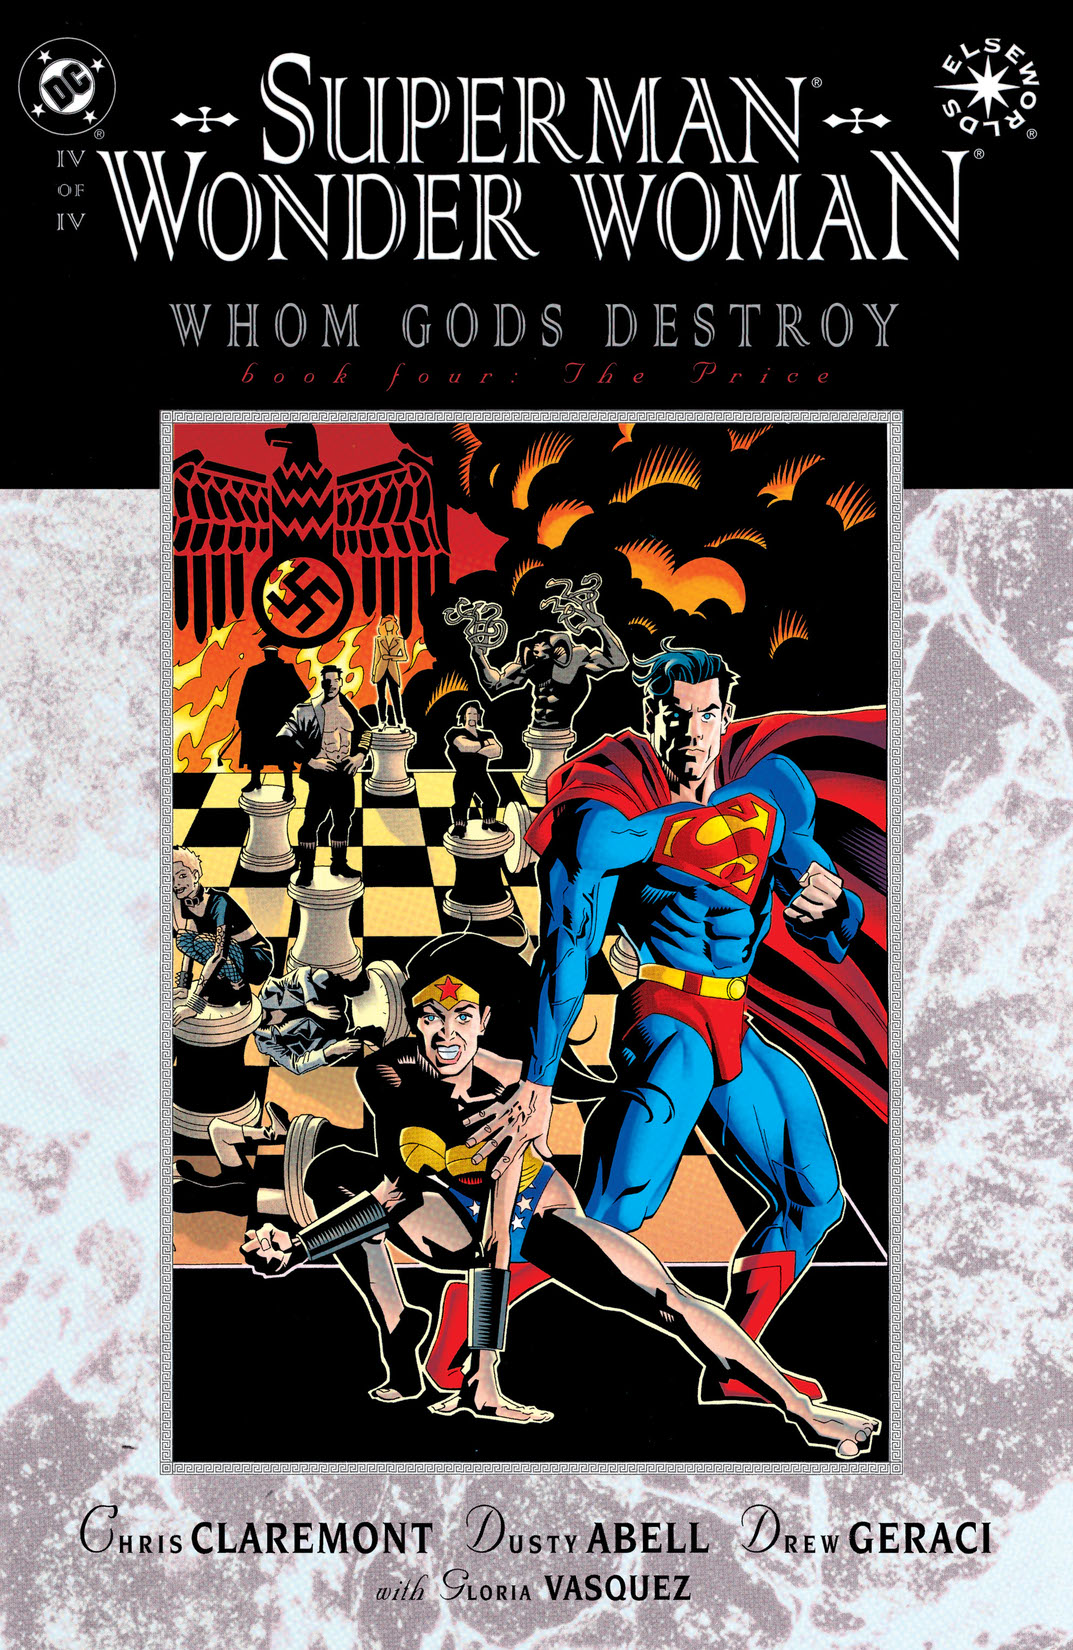 Superman/Wonder Woman: Whom Gods Destroy #4 preview images